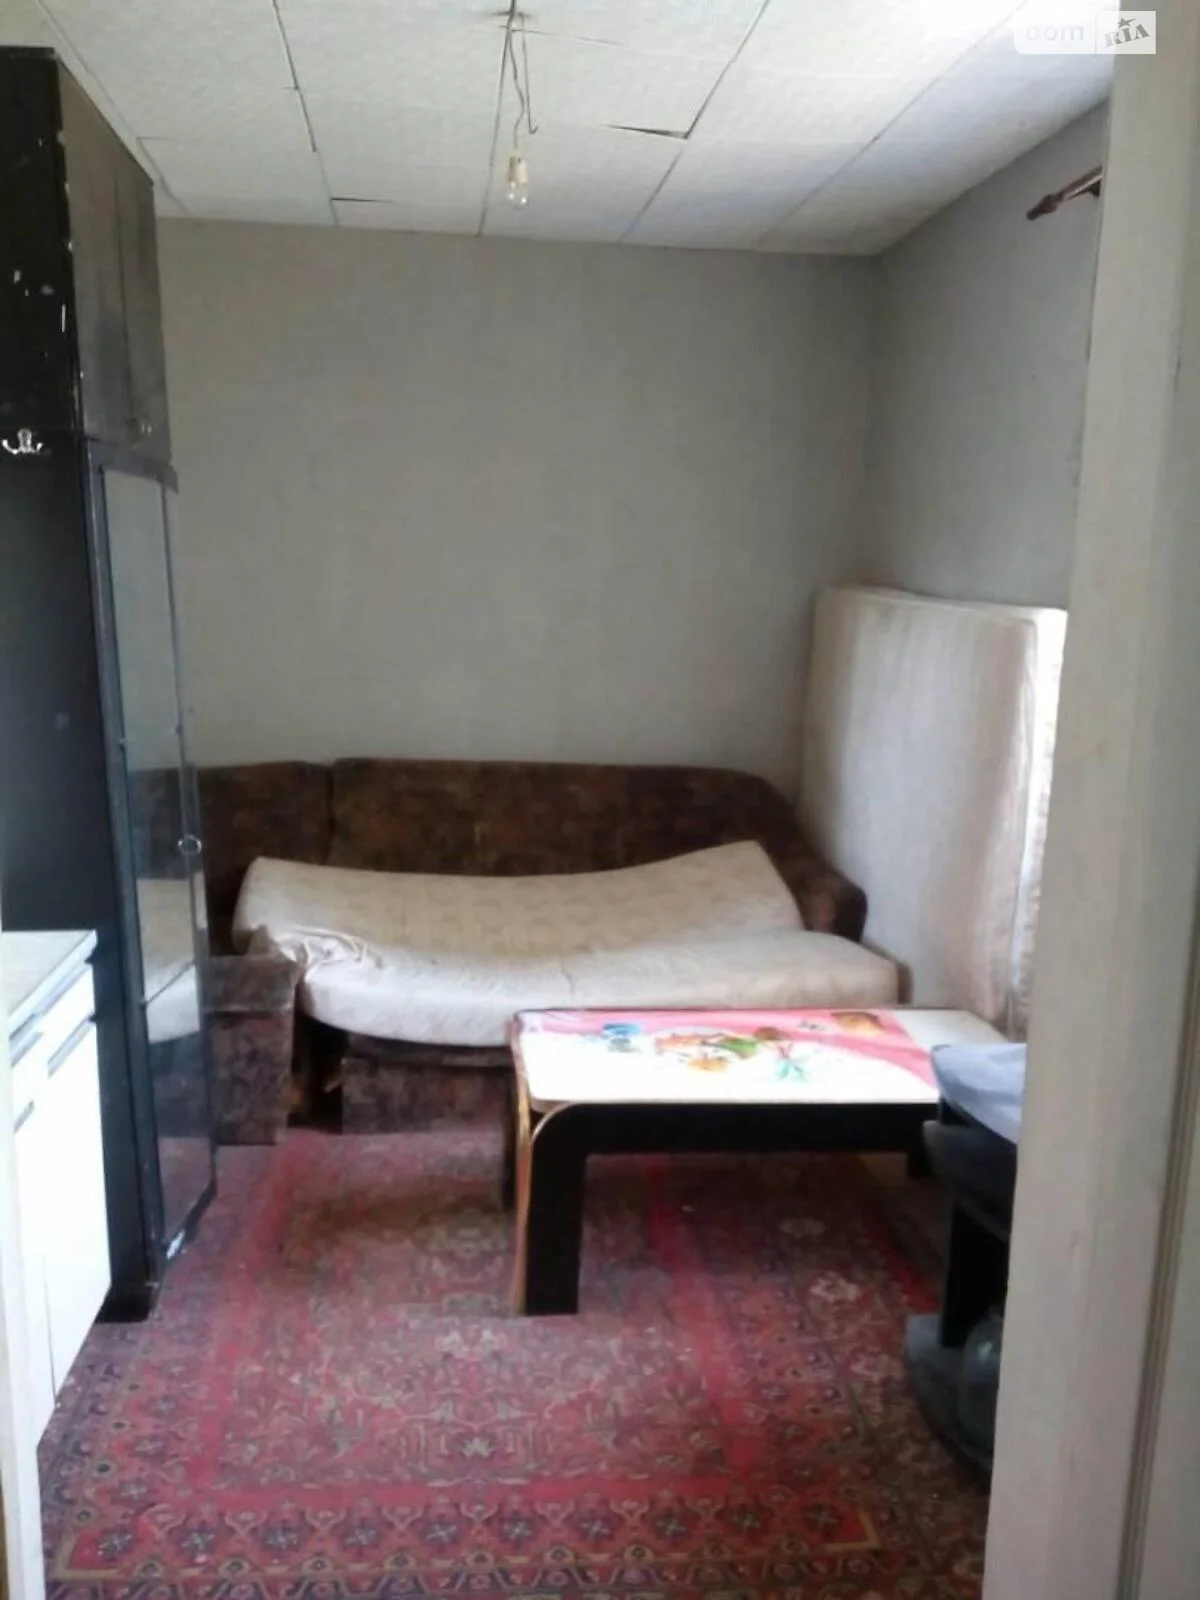 Продается комната 24 кв. м в Одессе, цена: 5500 $ - фото 1